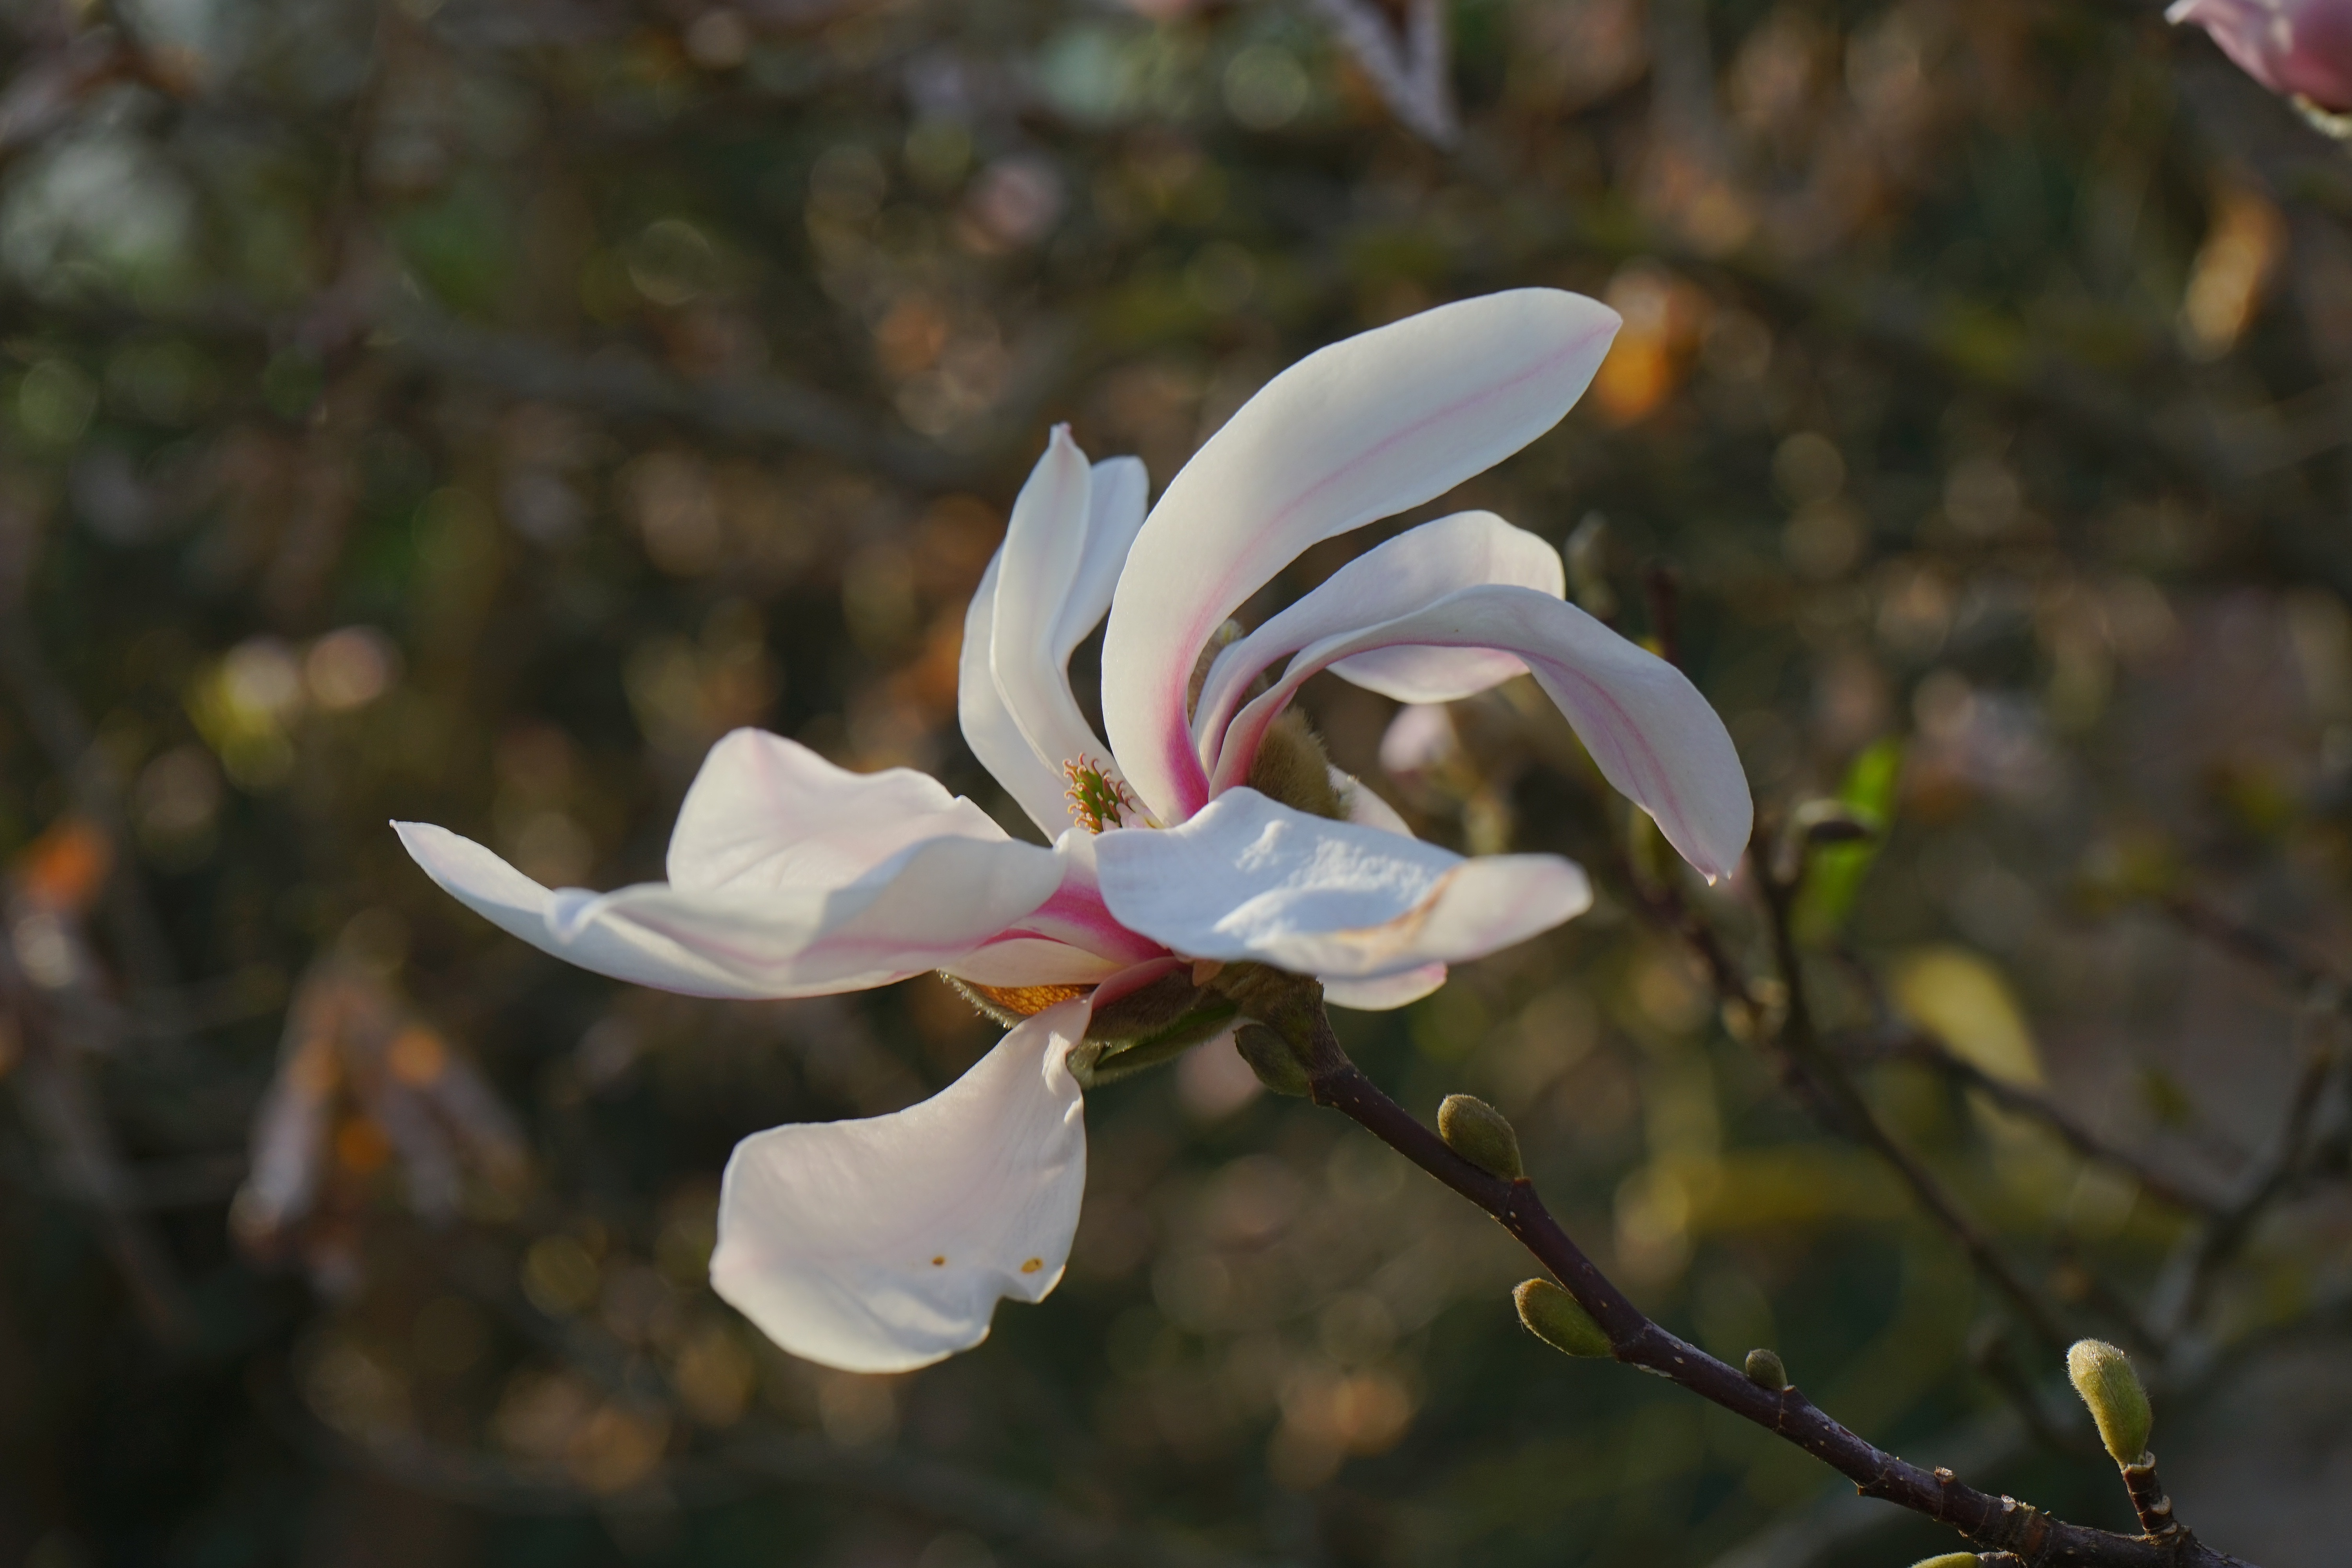 white petaled flower in macro photographt